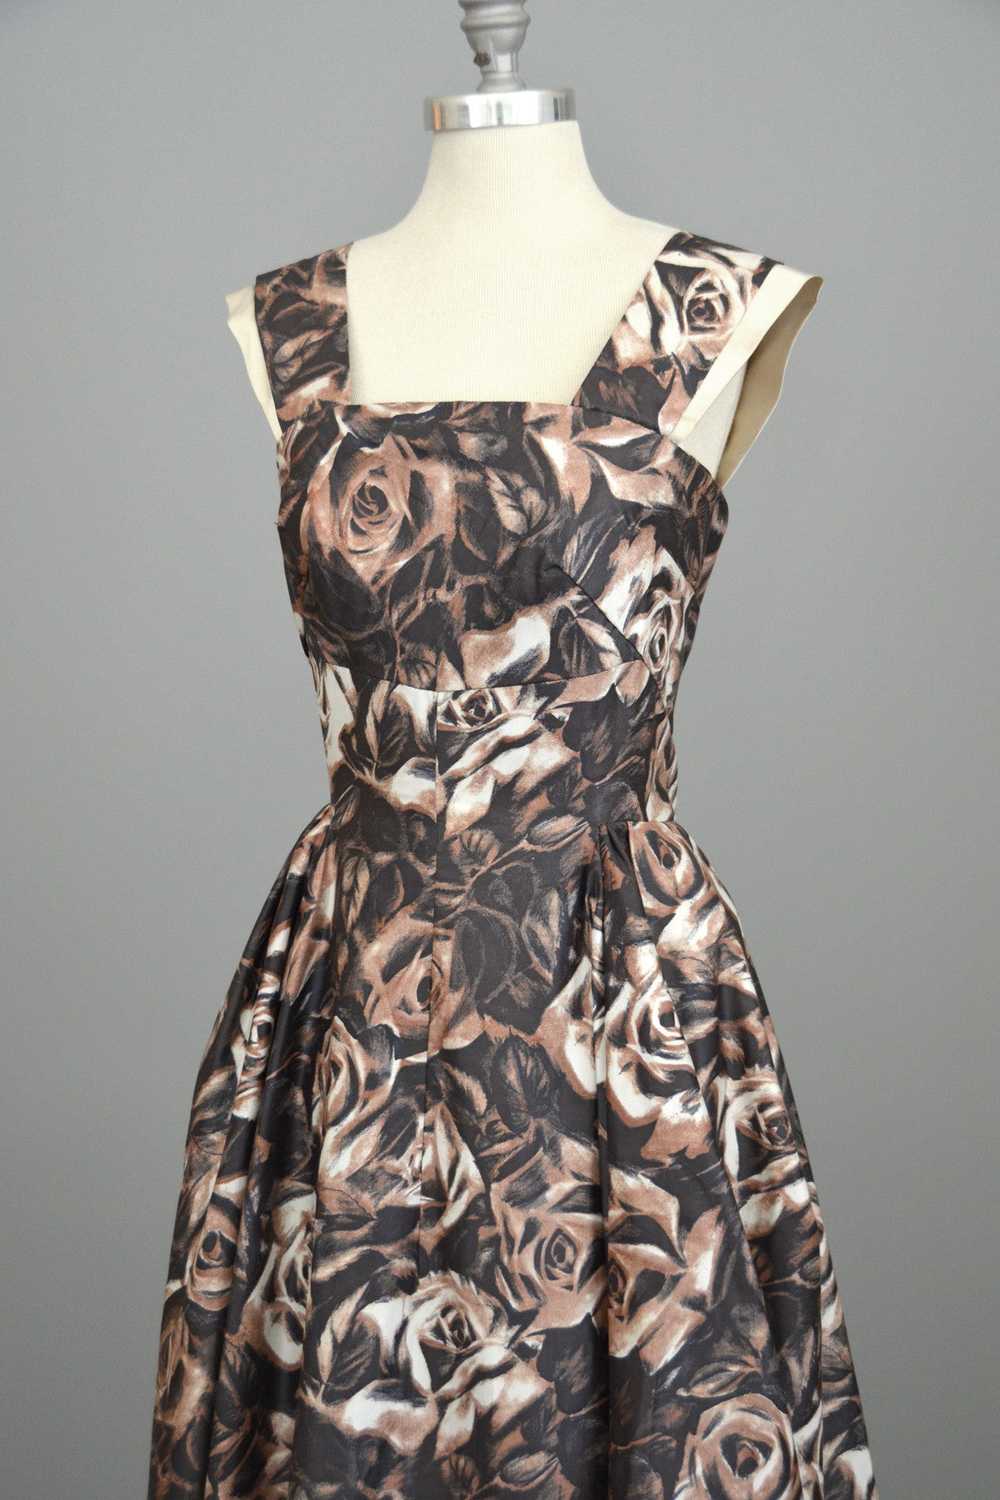 Vintage 1950s Retro Floral Print Evening Gown - image 4